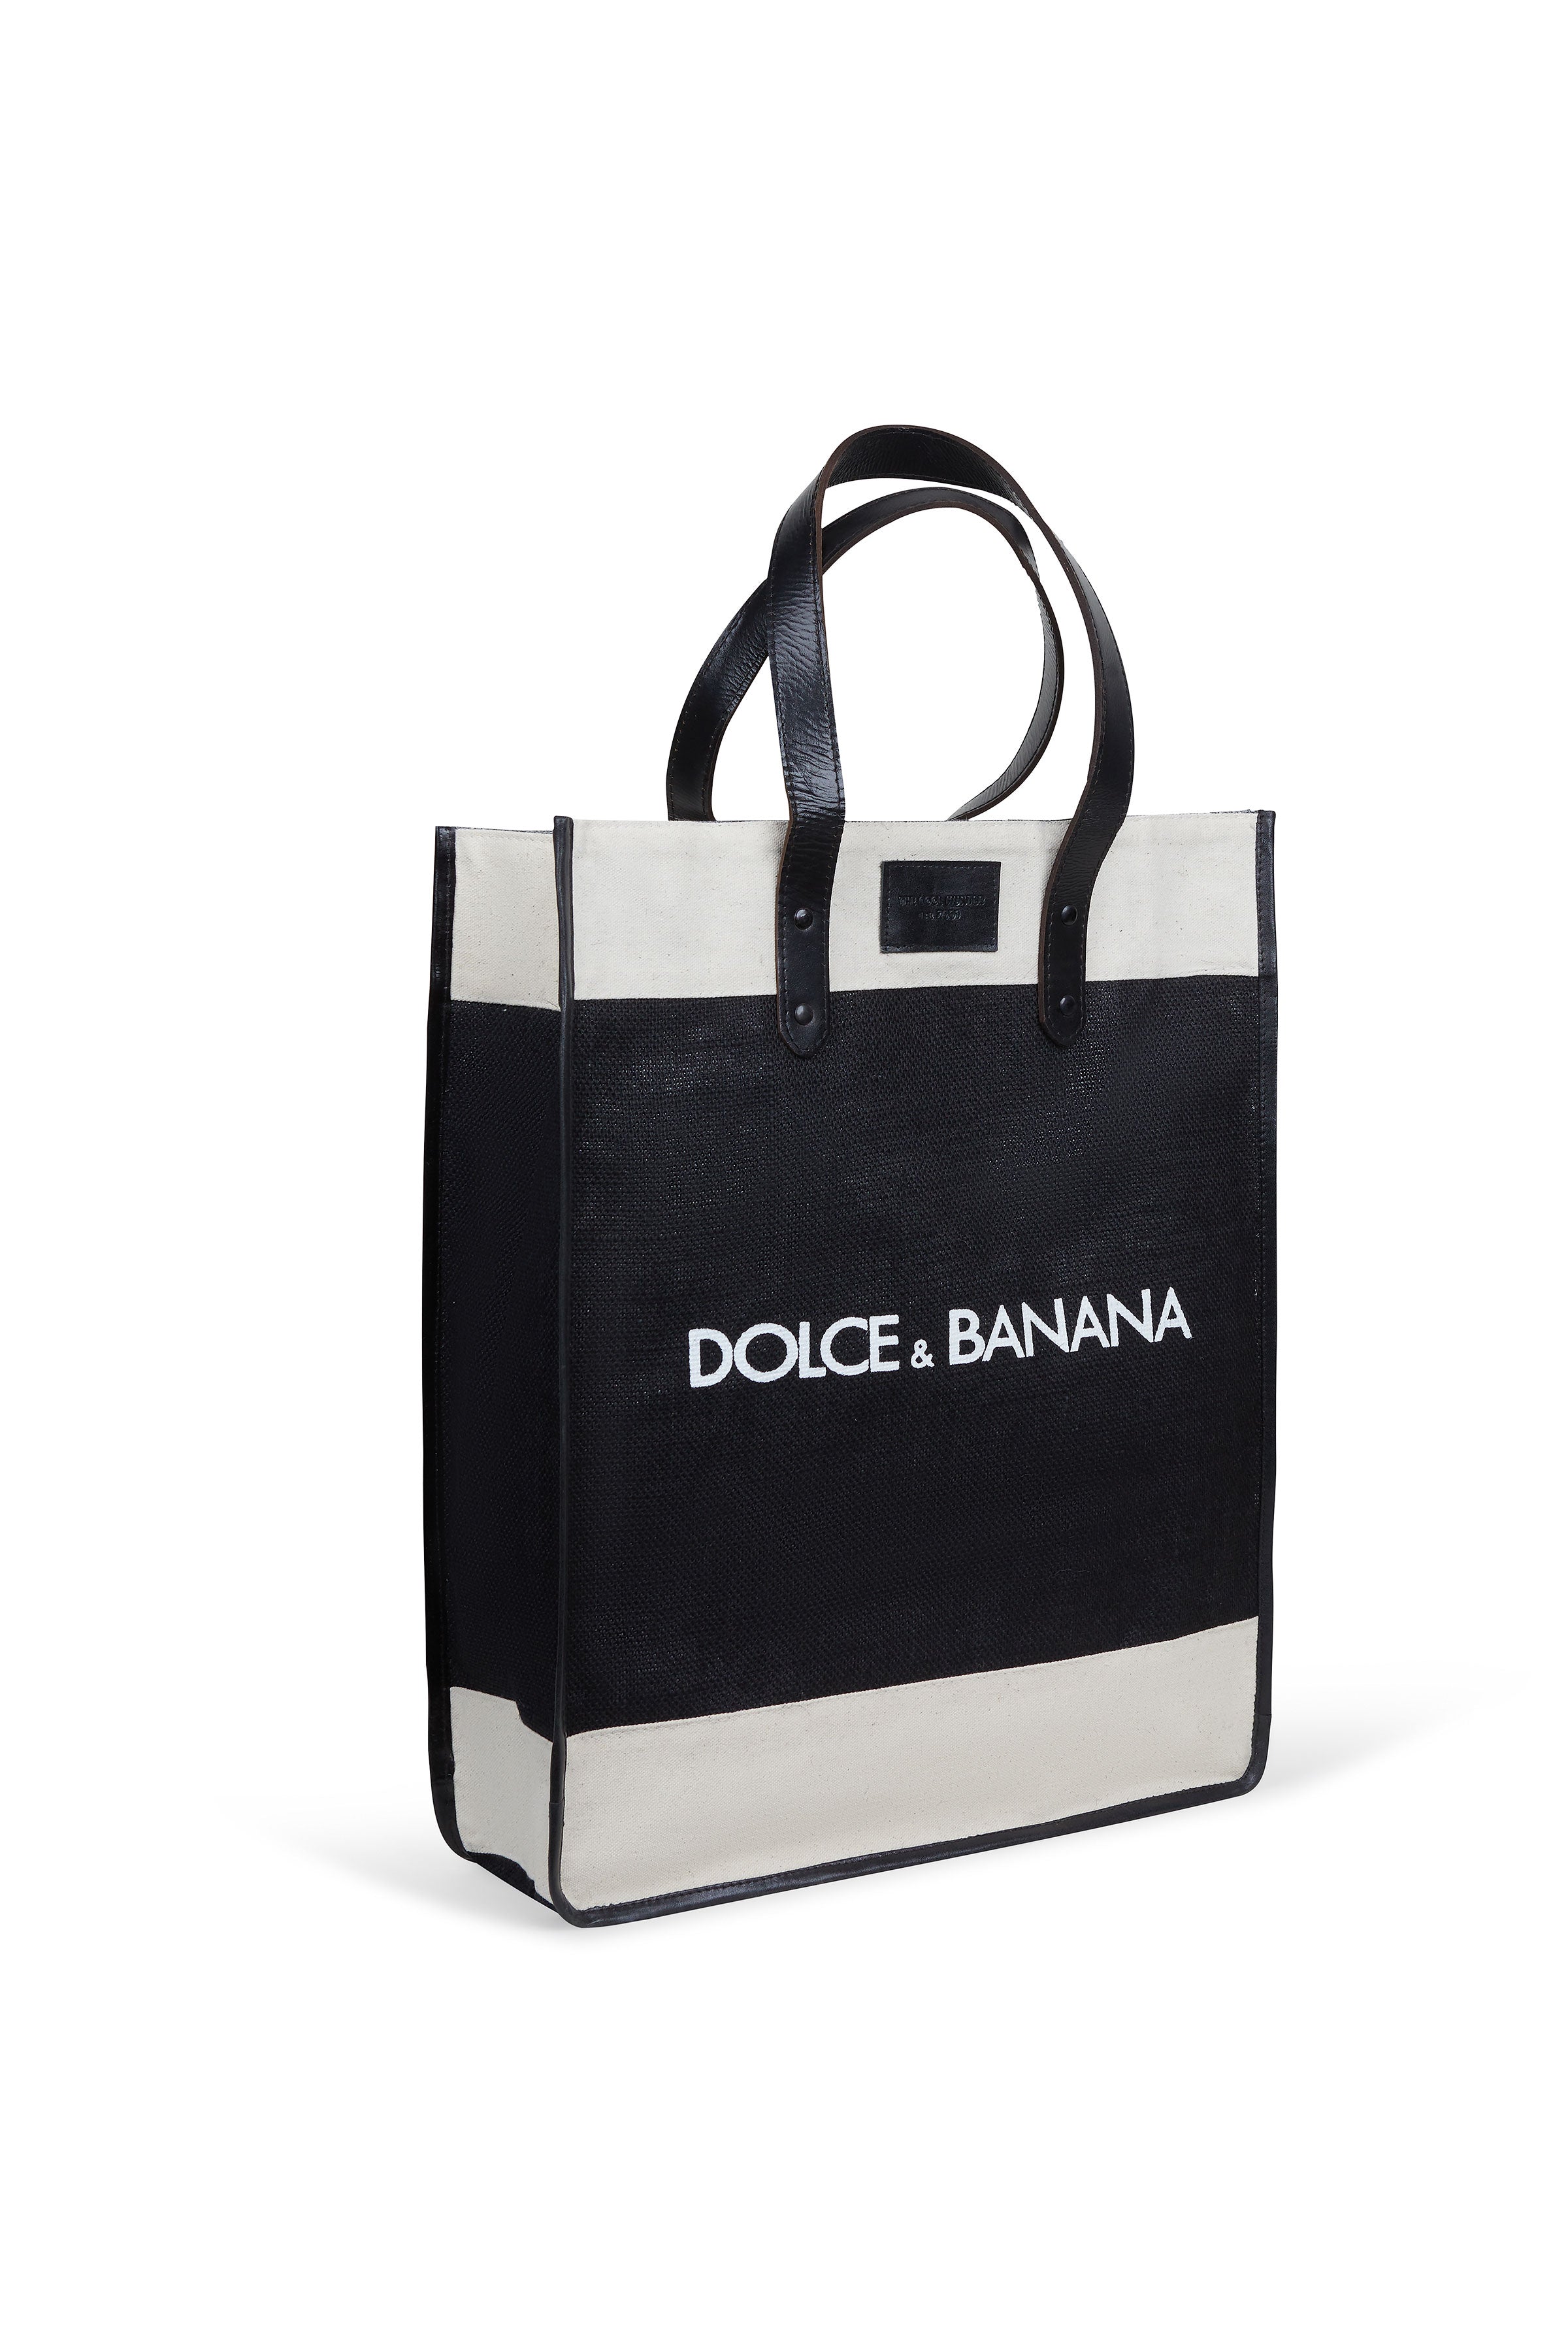 The Cool Hunter Market Bag Black Leather - Dolce & Banana - NEW